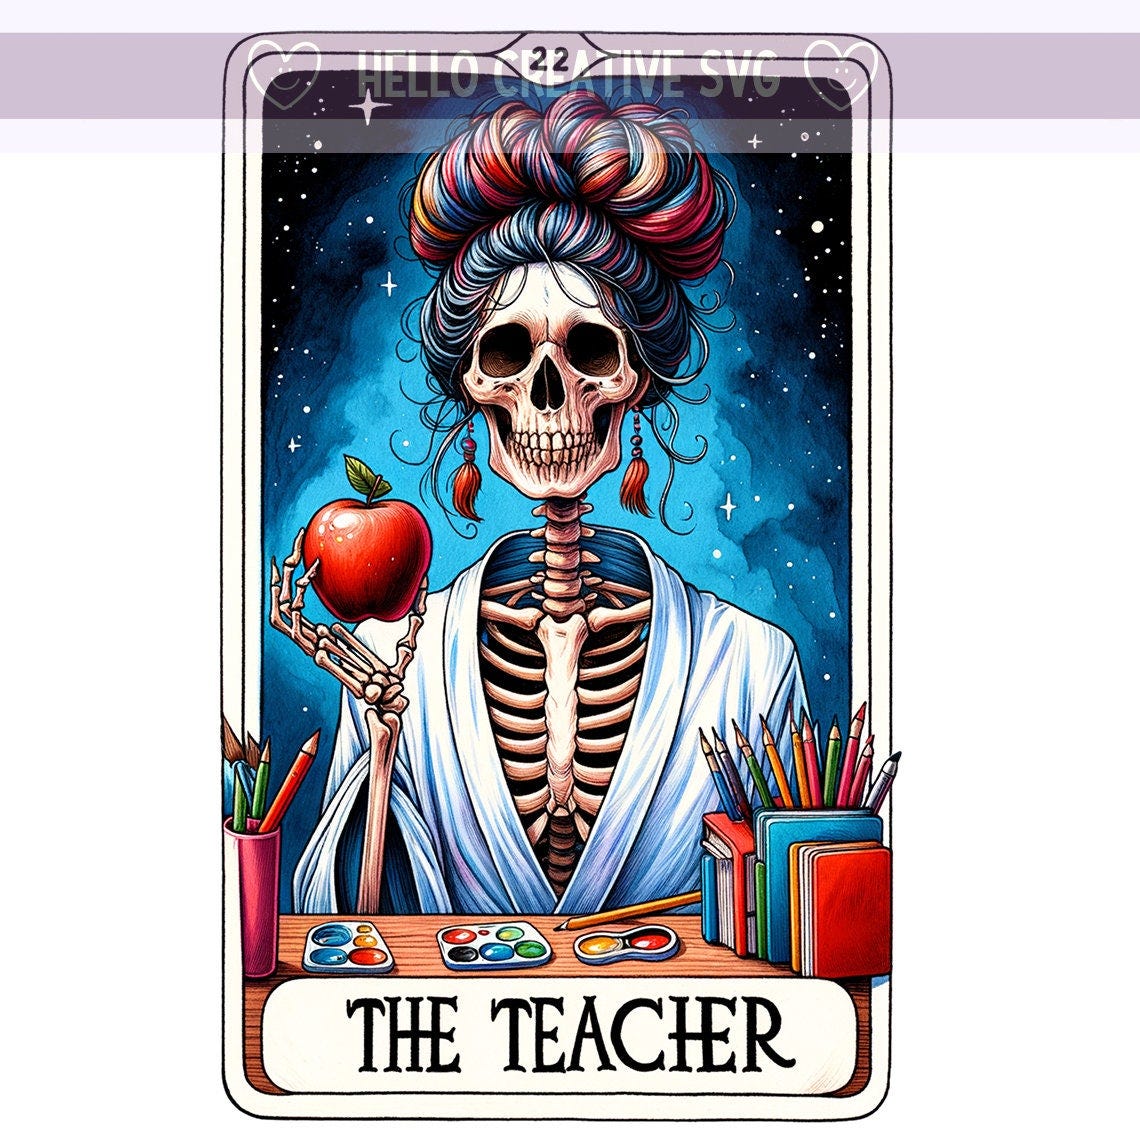 The Teacher Tarot Card PNG, Witchy Skeleton  Teaching Skull Tarot, Teacher Png, Tarot Card PNG, Sublimation Design, PNG Digital Download